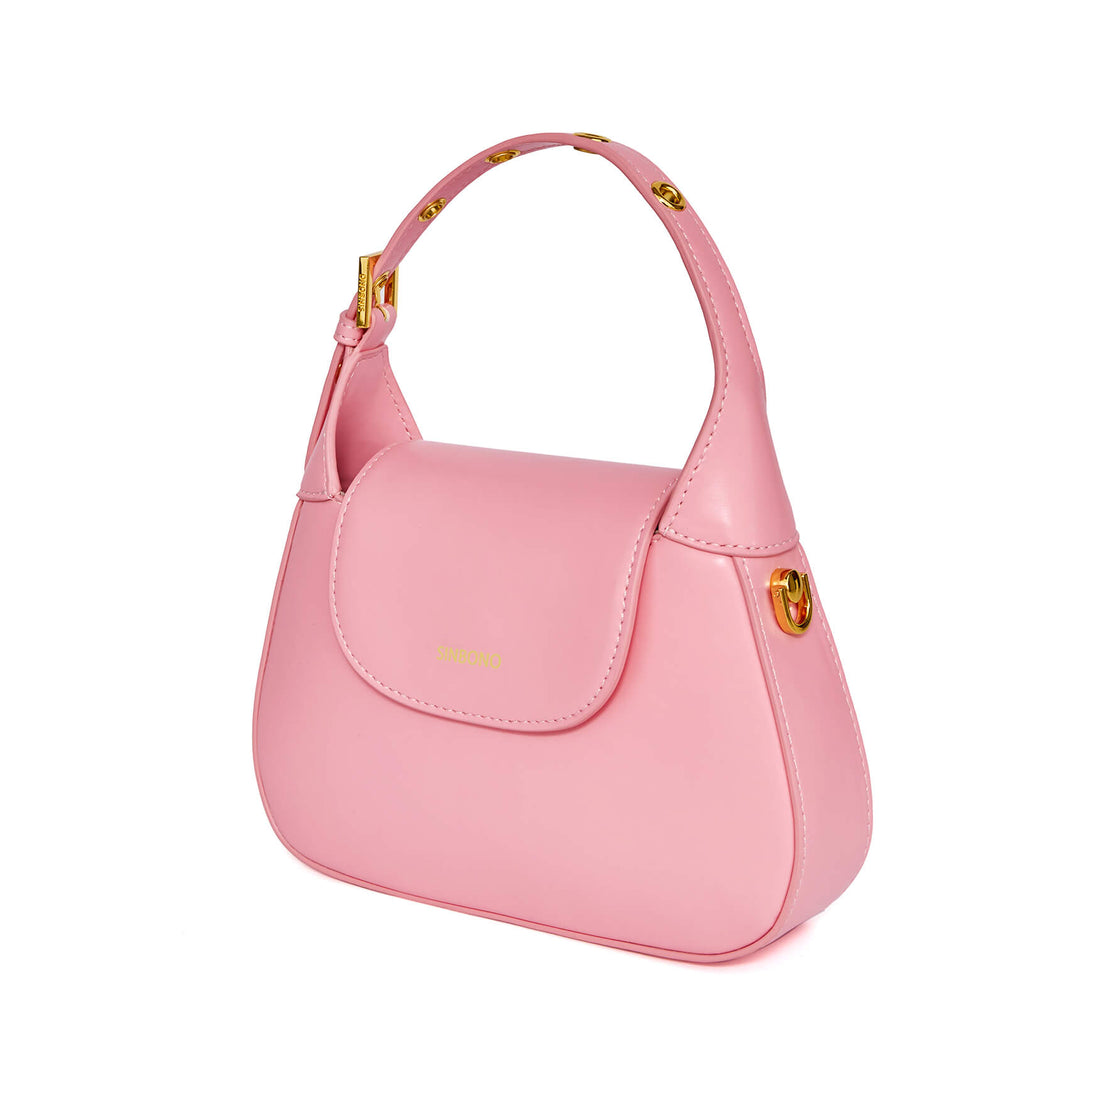 SINBONO Luxury Designer Pink Bag- Women's Alice Top Handle Bag